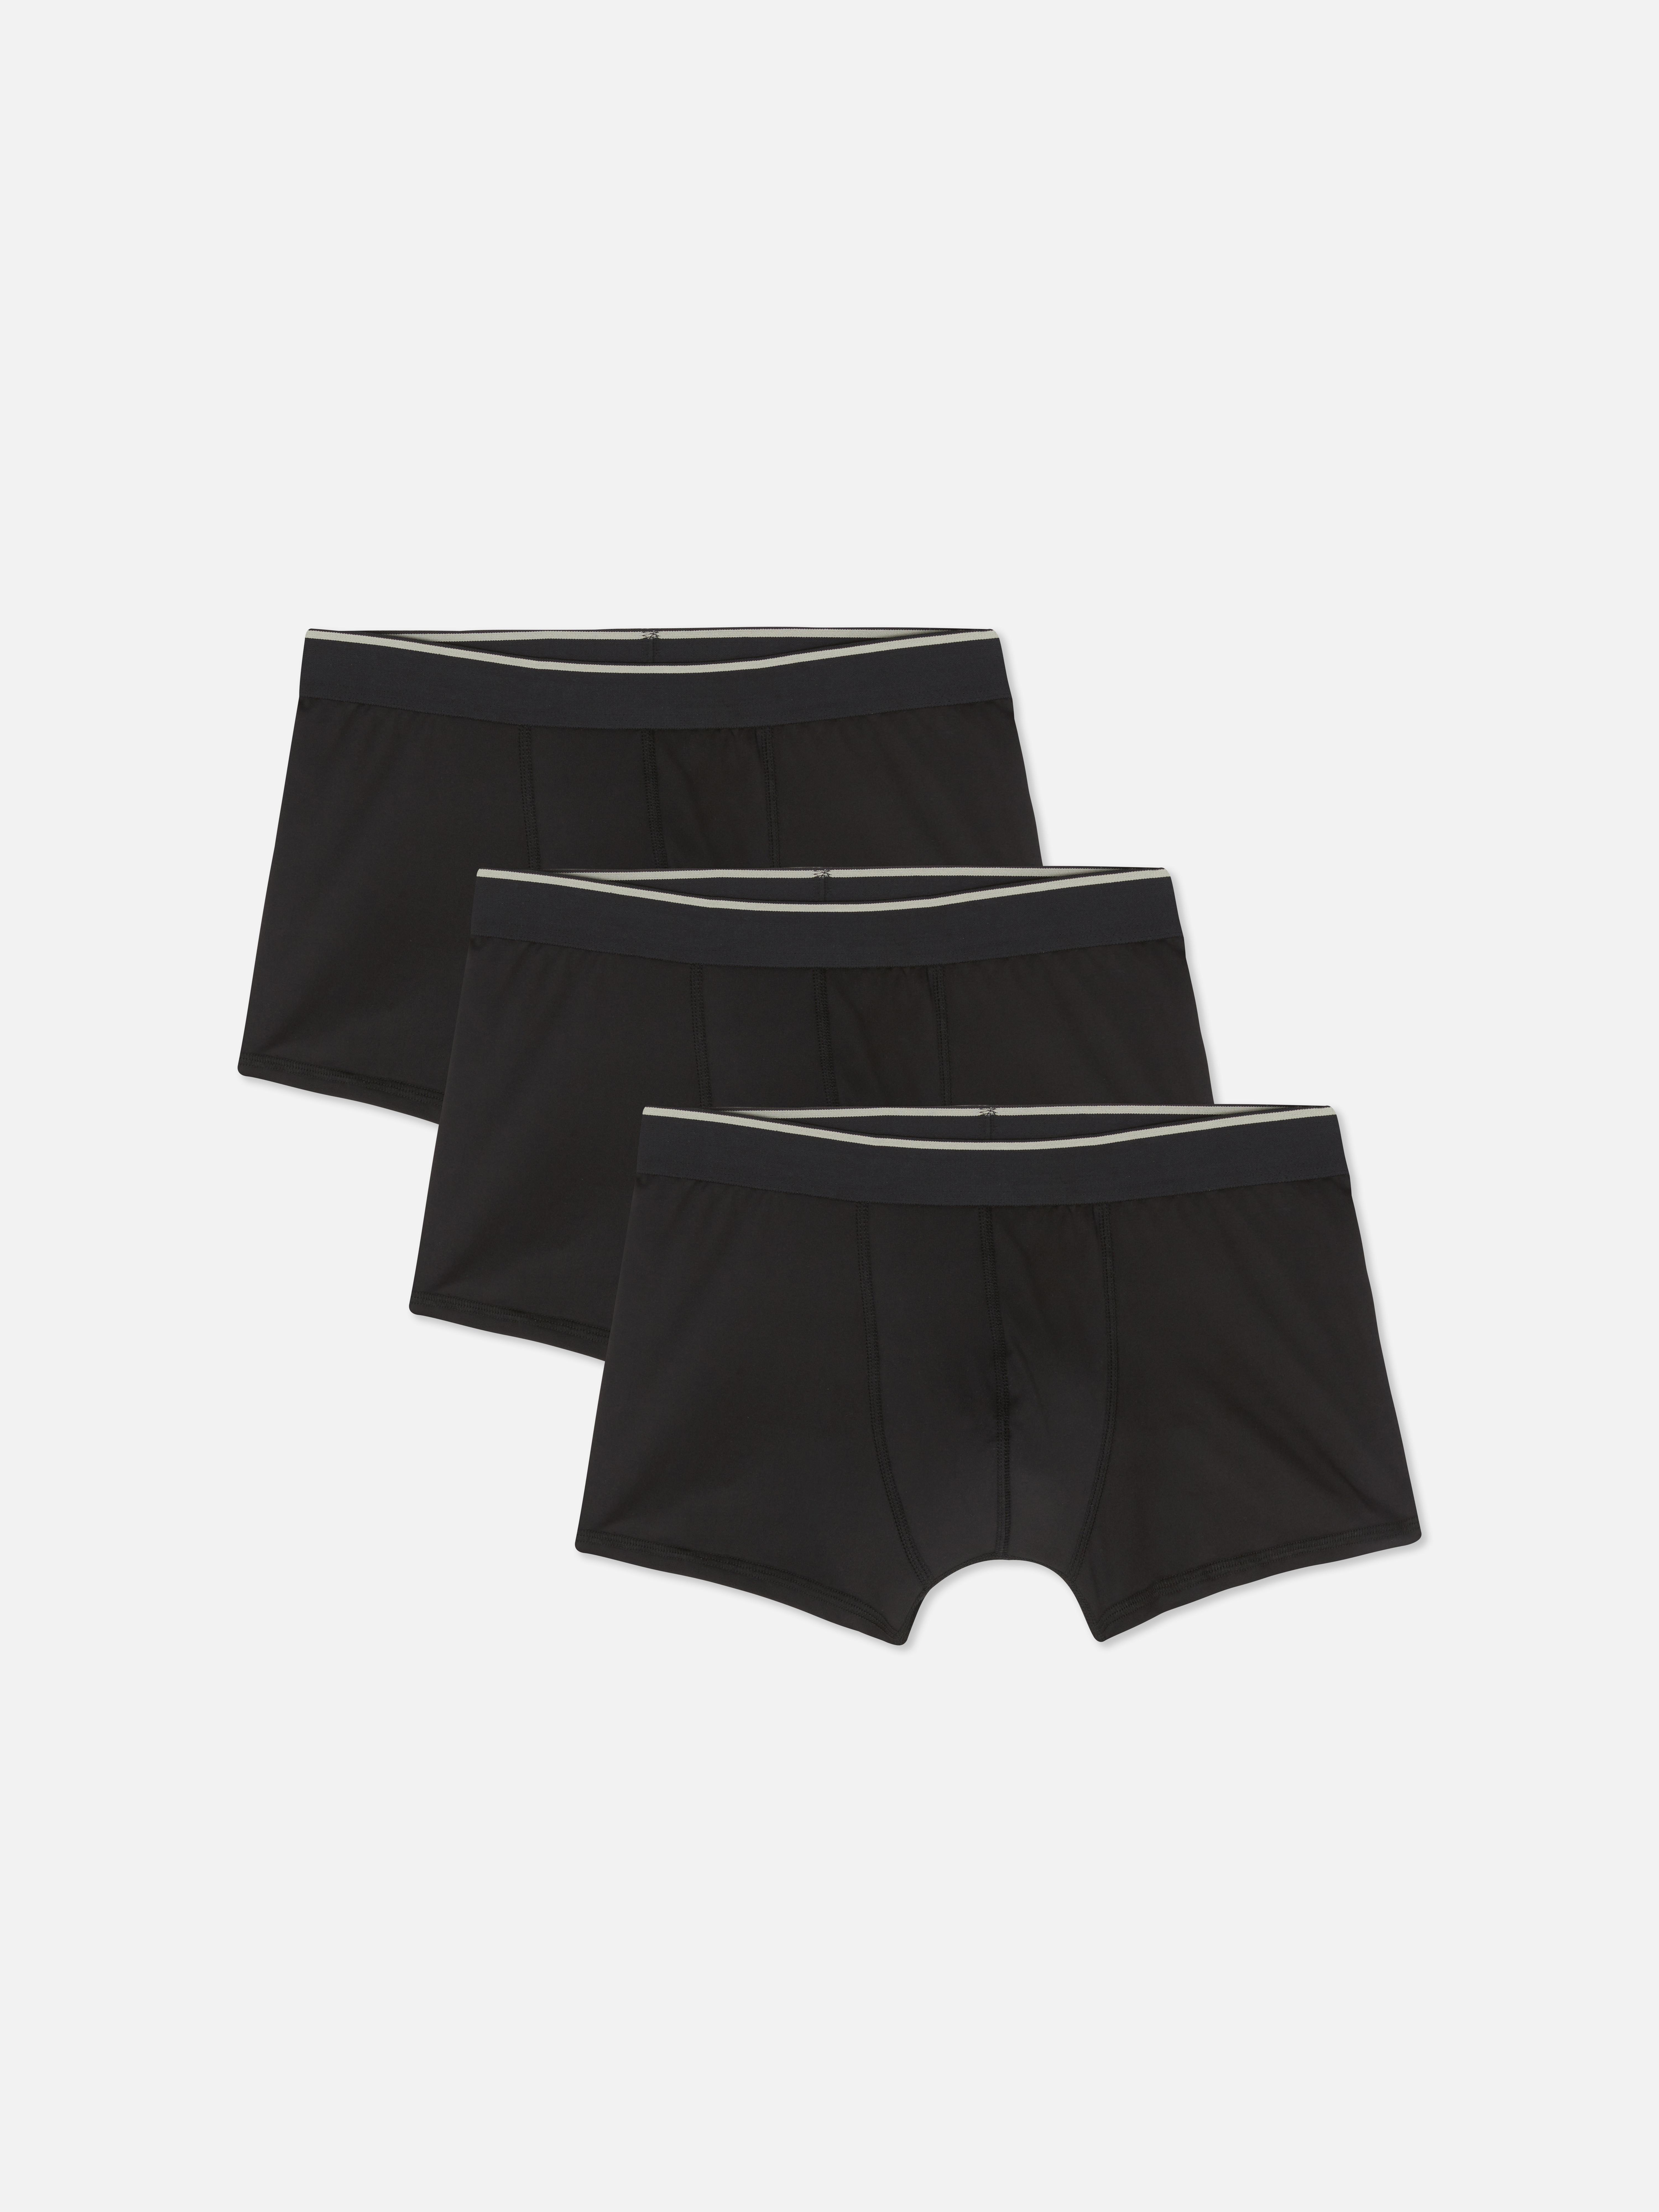 Batman Mens Black & Gray Character Underwear Boxers Boxer Shorts